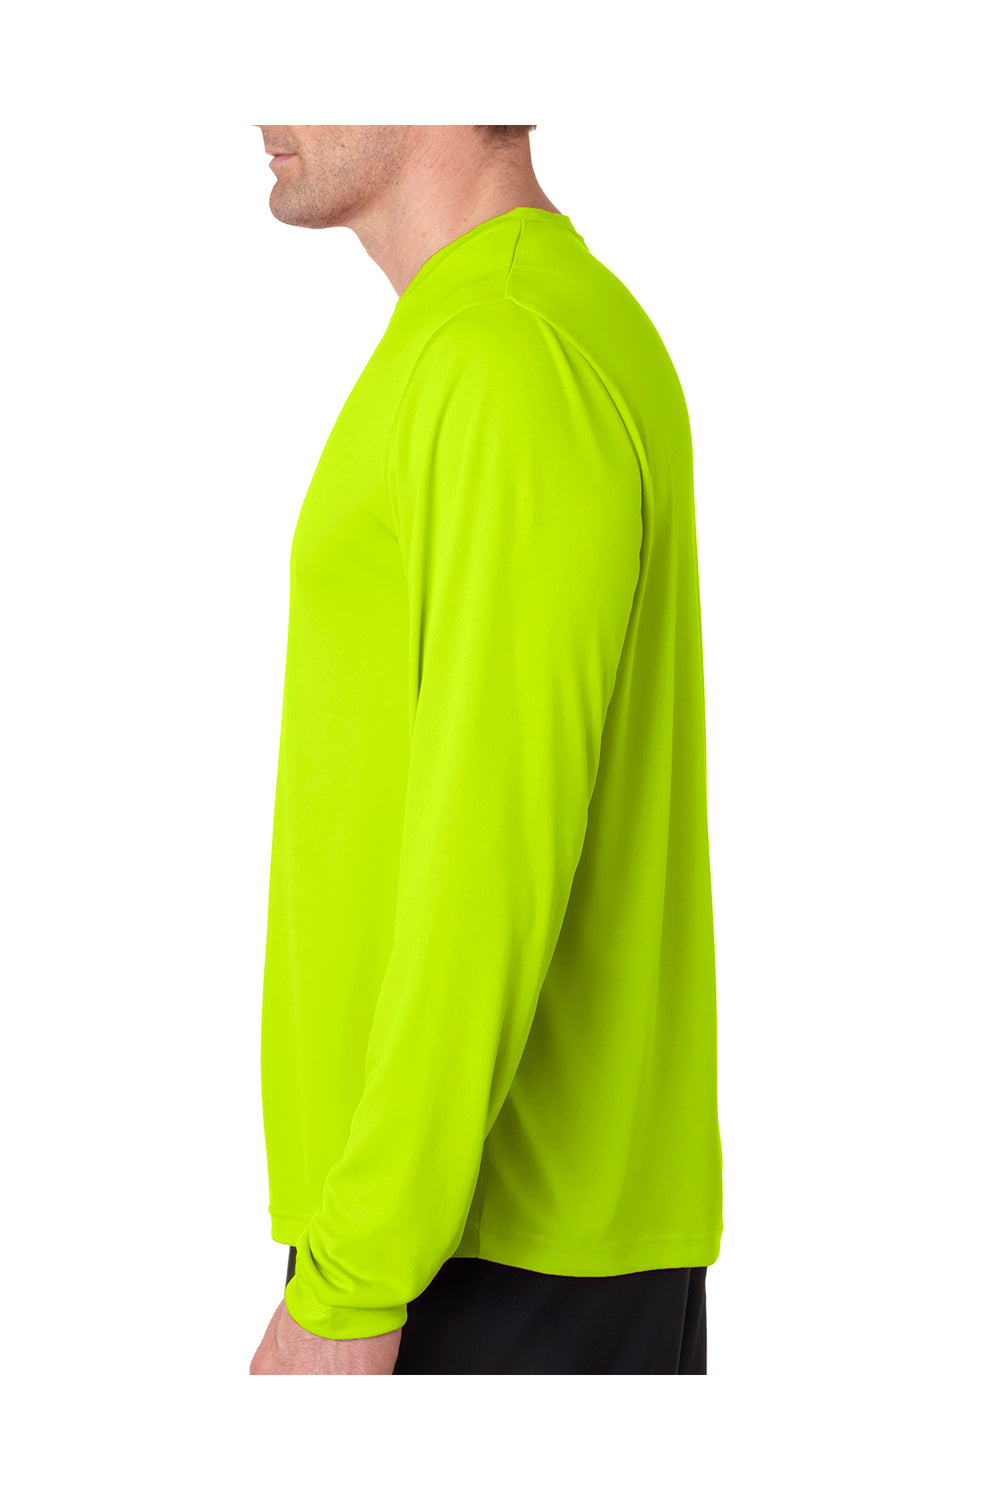 Hanes 482L Mens Cool DRI FreshIQ Moisture Wicking Long Sleeve Crewneck T-Shirt Safety Green Side